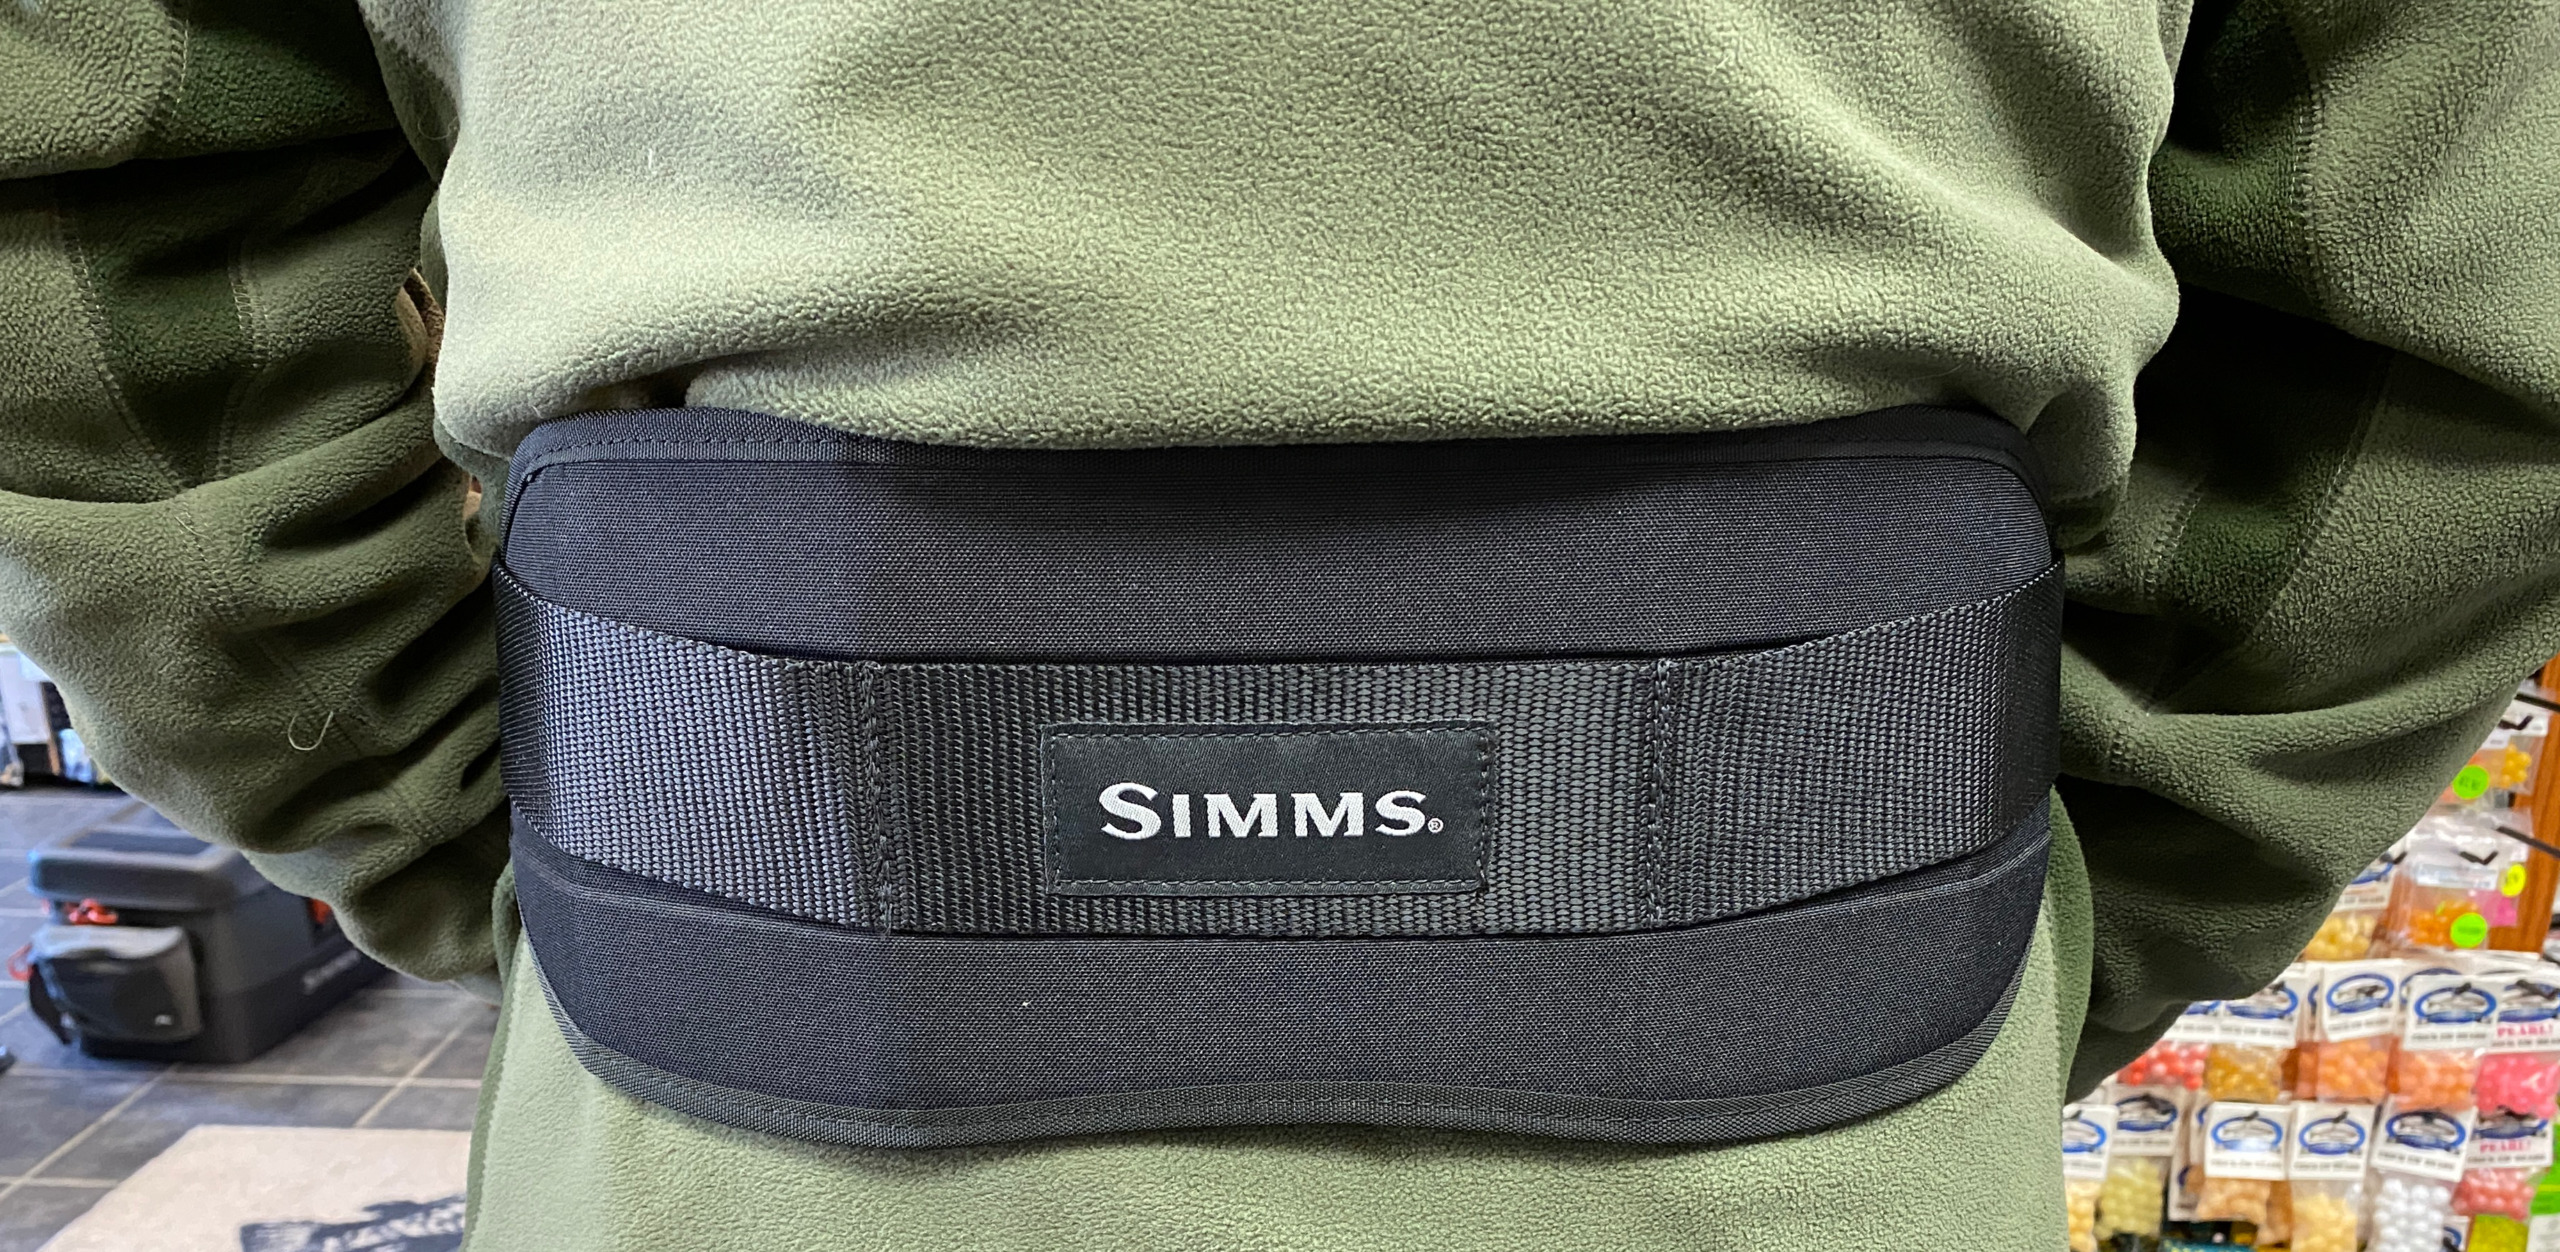 Simms Lumbar Backsaver Belt - VEVER USED! - $60